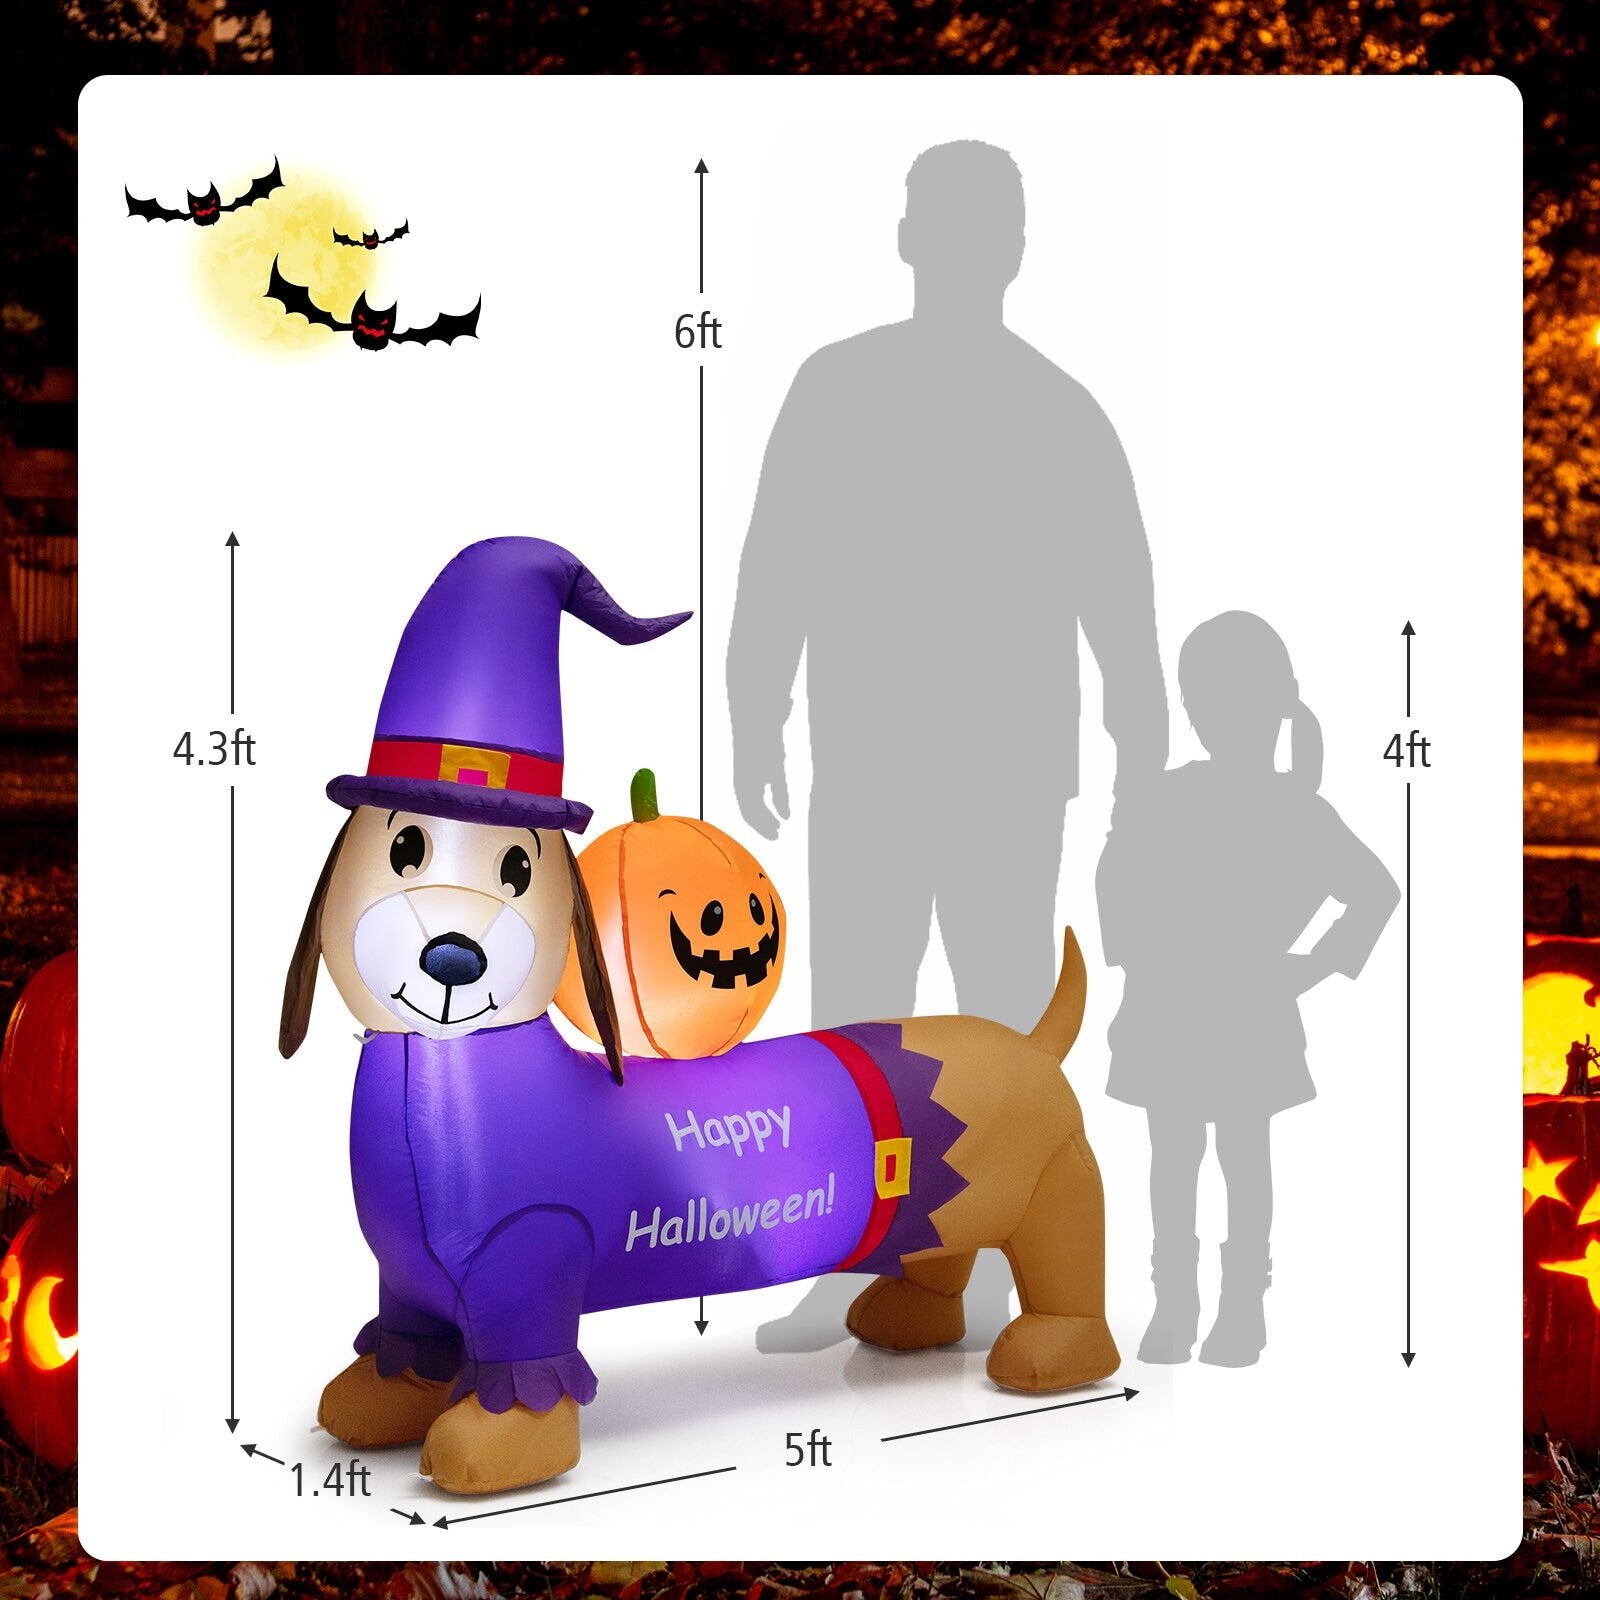 5 Feet Long Halloween Inflatable Dachshund Dog with Pumpkin, Purple - Gallery Canada